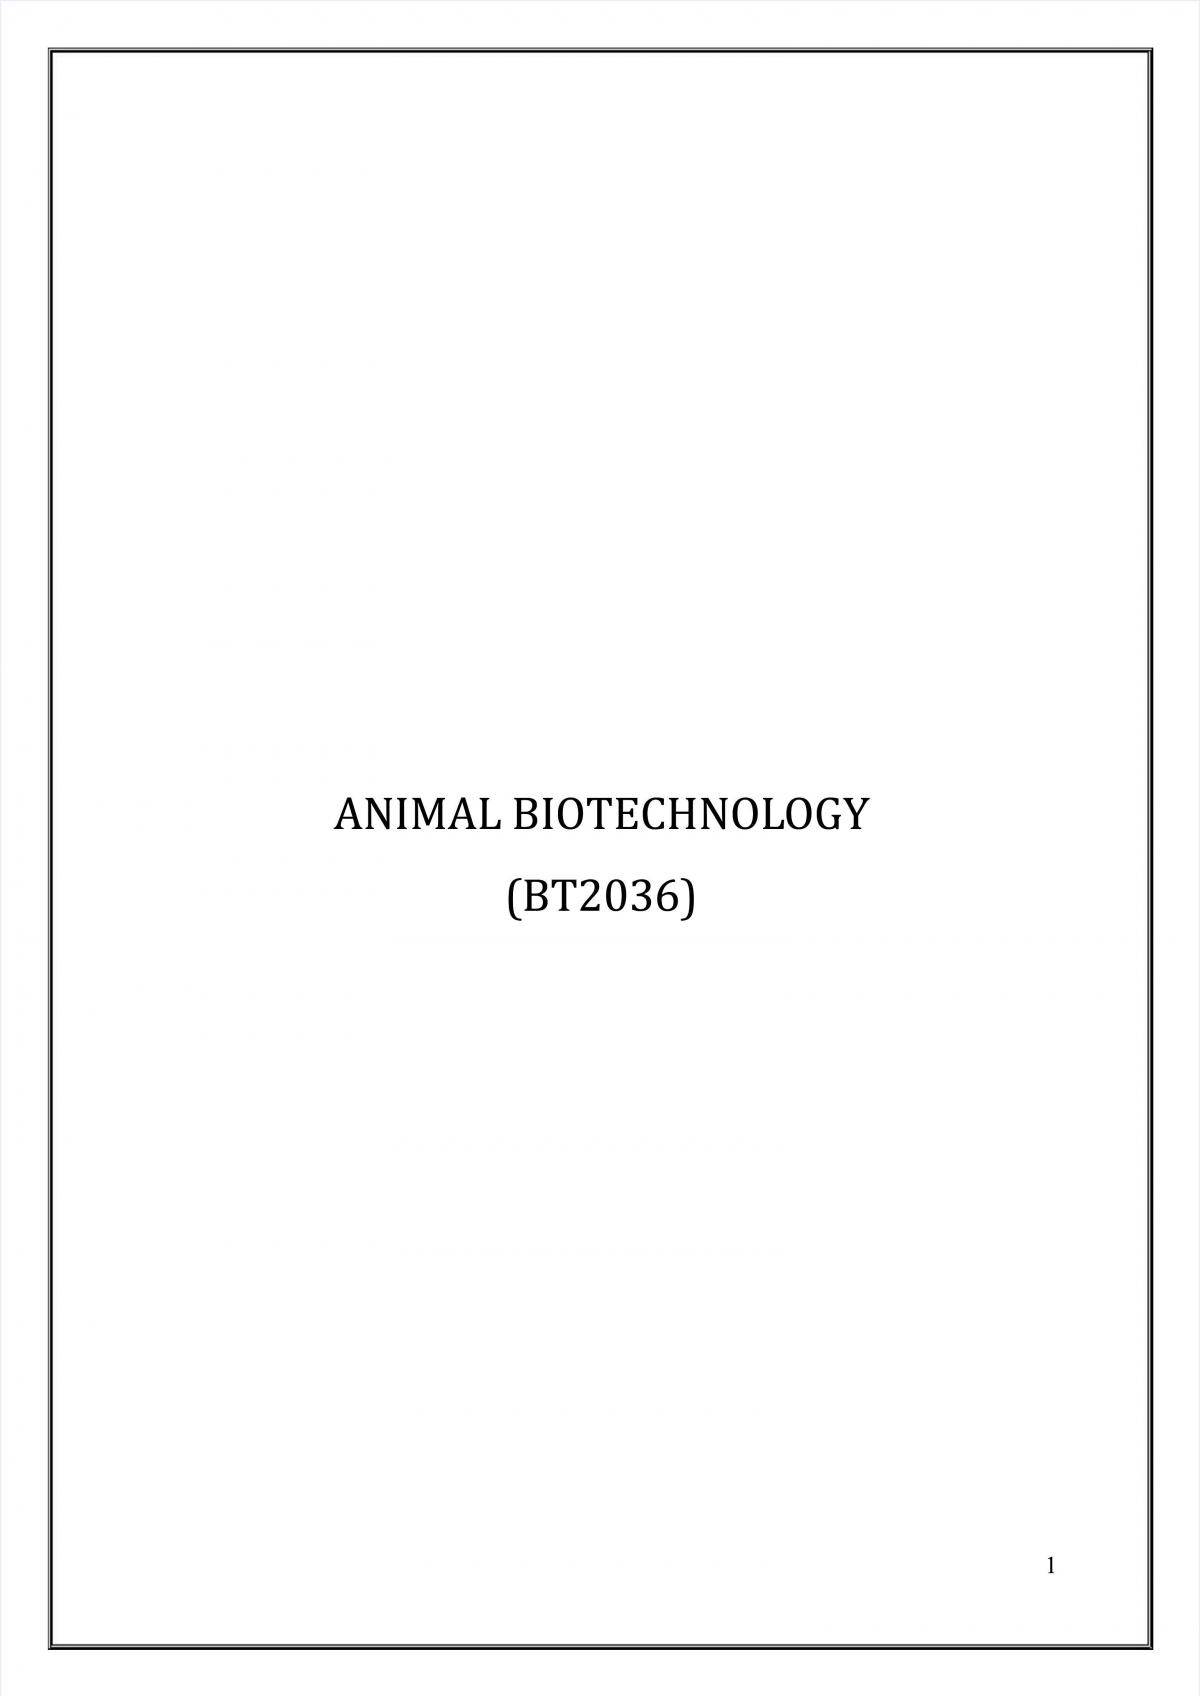 Animal Biotechnology Notes | BT2036 - Animal Biotechnology - UKM | Thinkswap